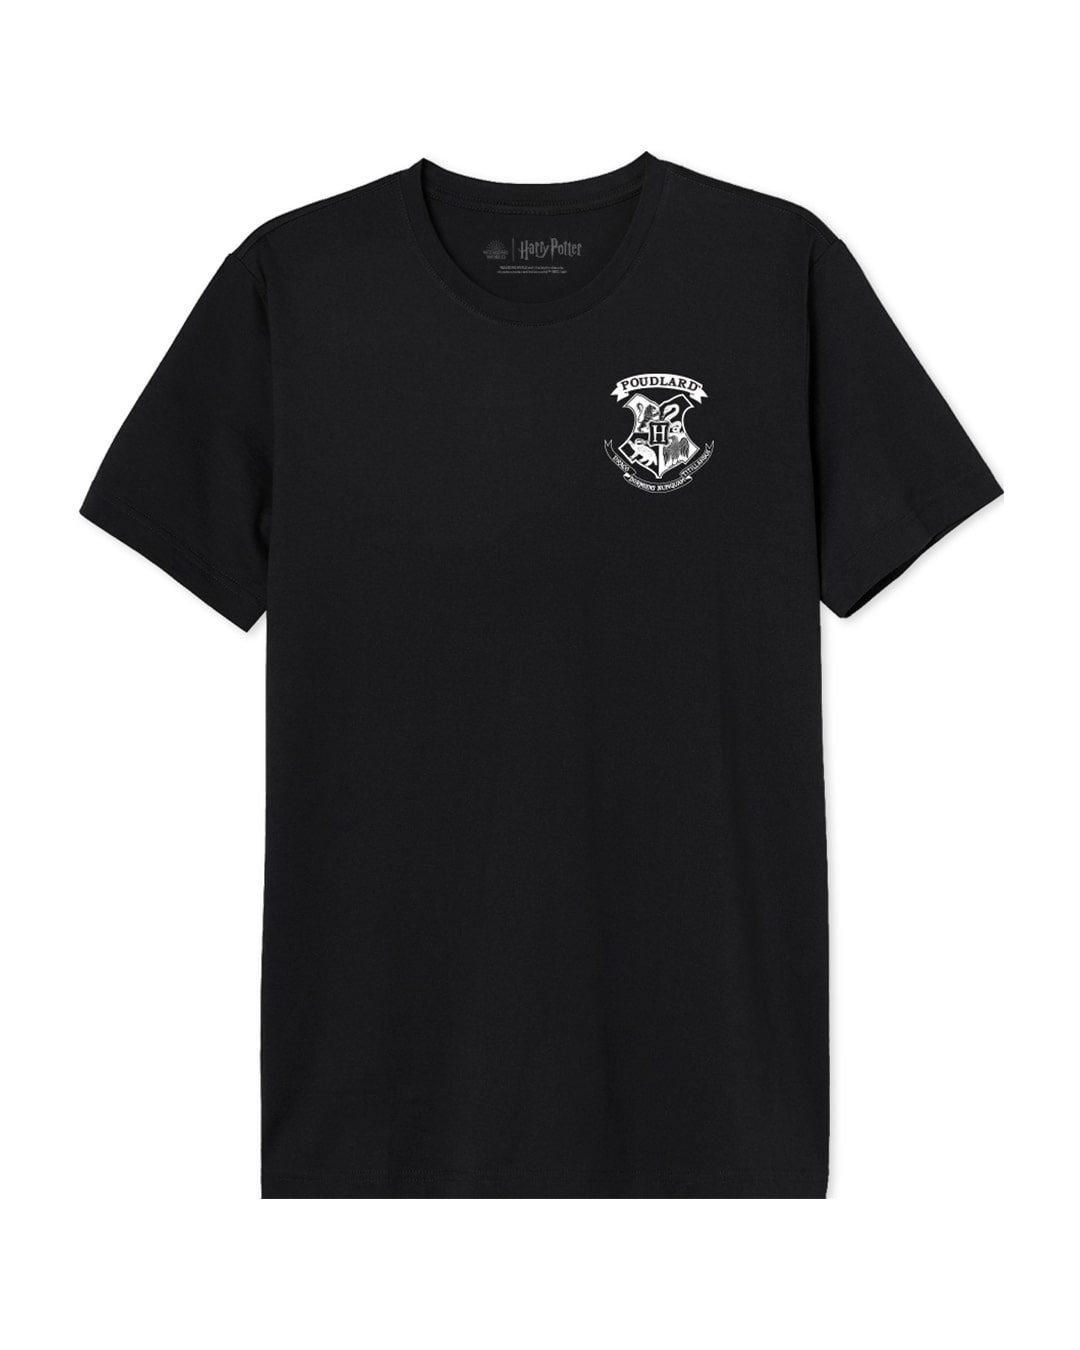 T-shirt noir blason de Poudlard